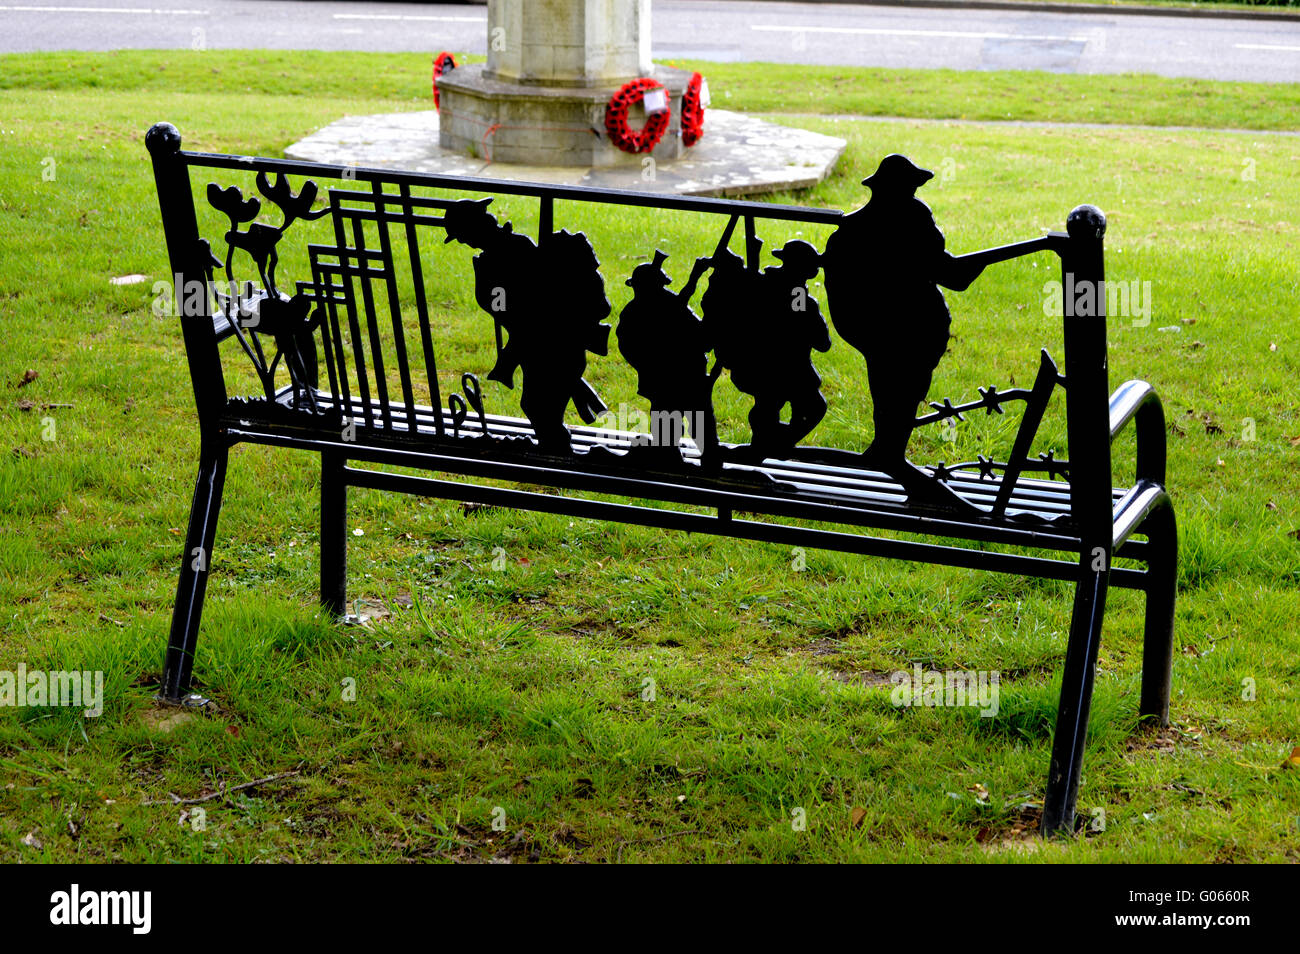 A War memorial bench in front of a war memorial. Stock Photo